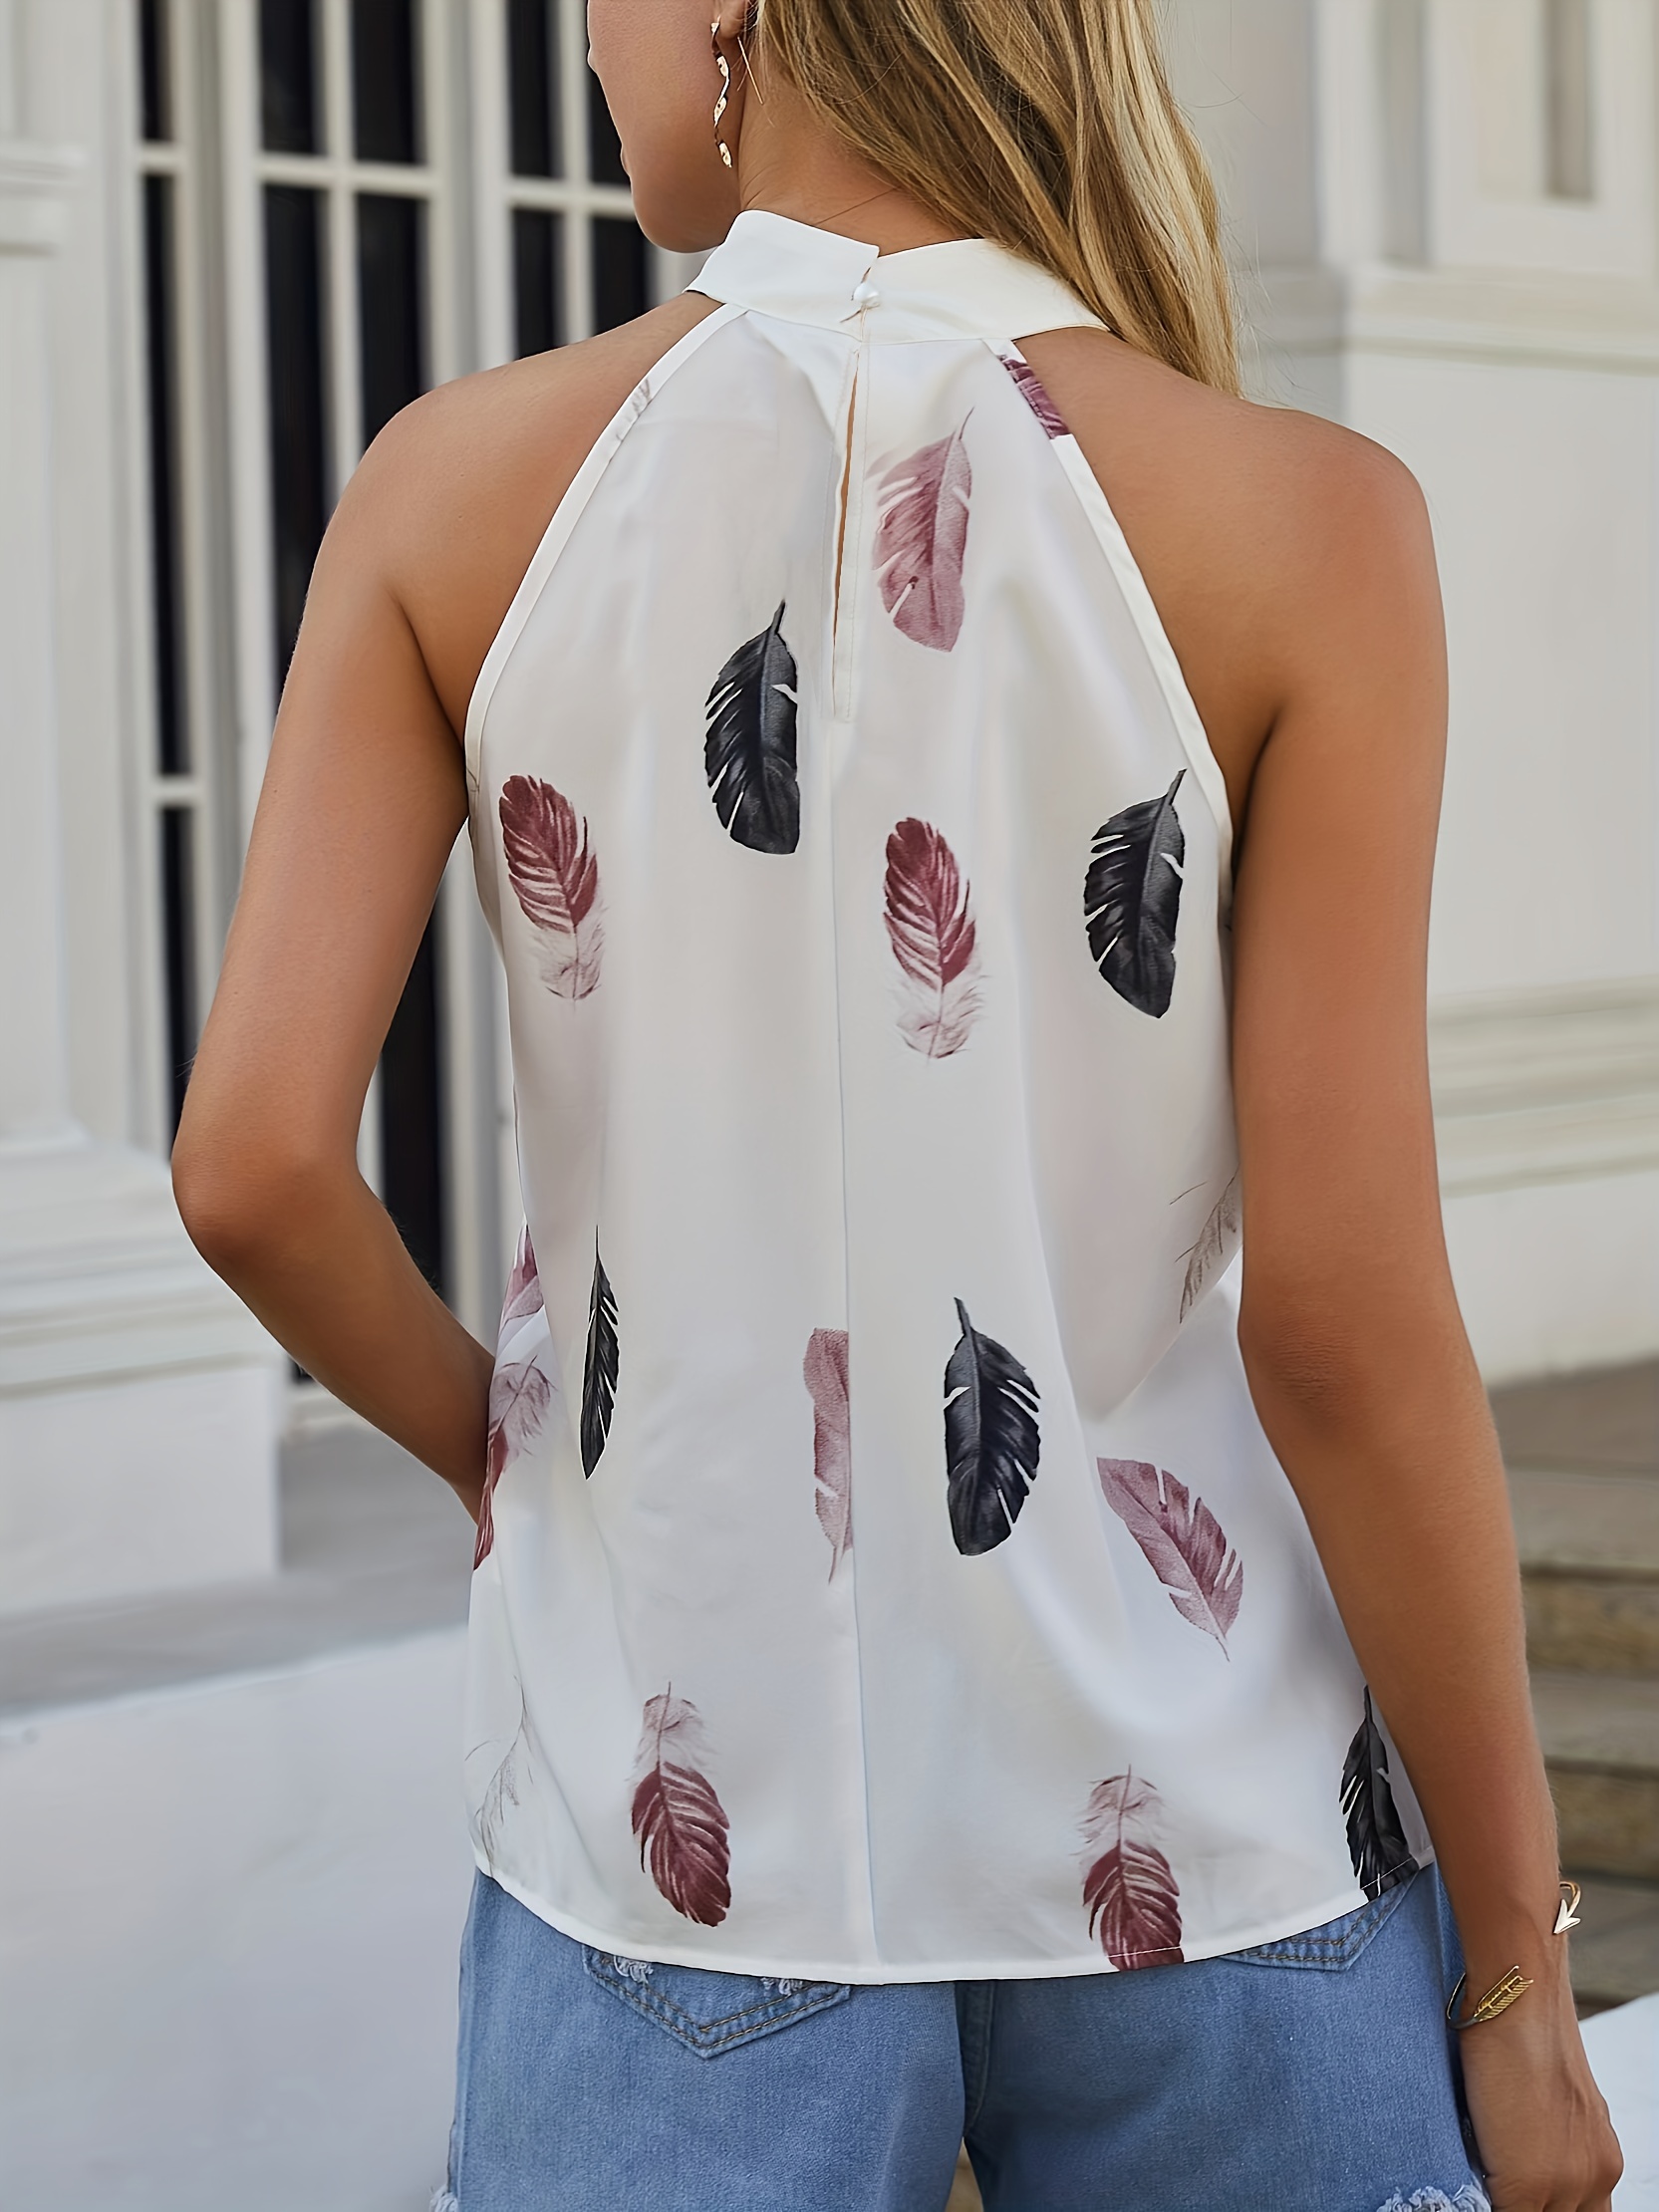 Summer Women's Printed Sexy Sleeveless Camisole Halter Top Fashion